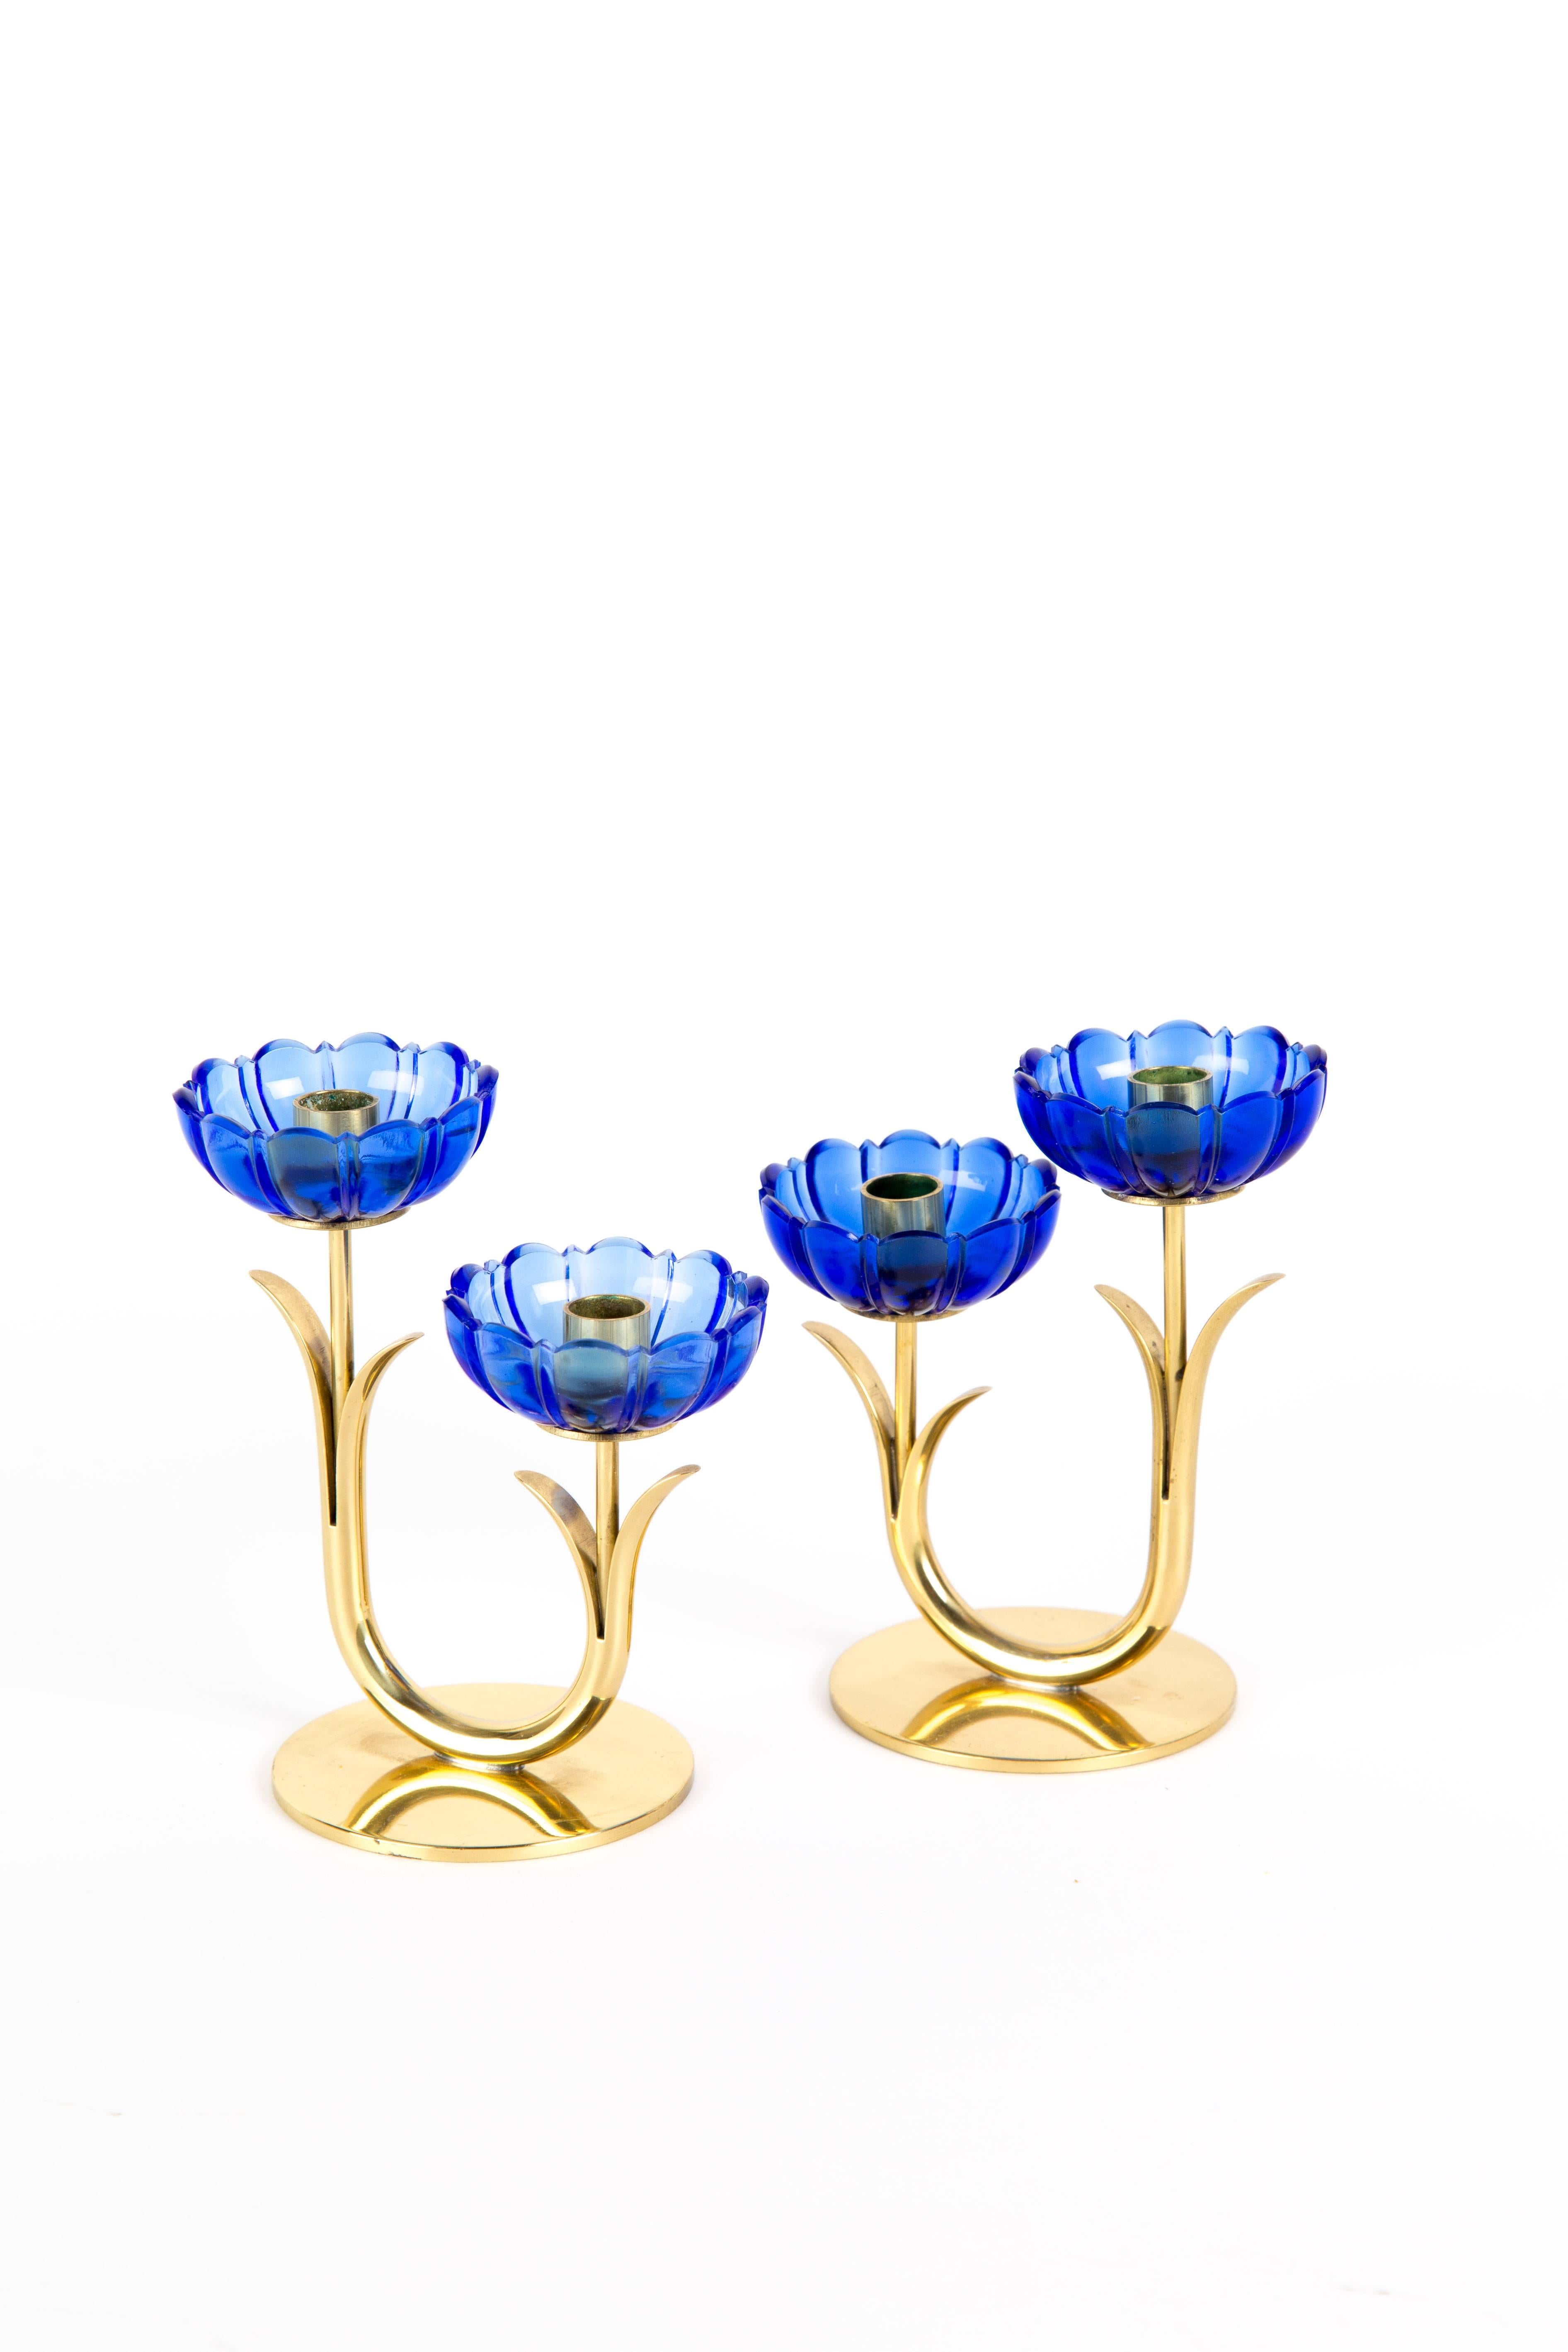 Scandinavian Modern GUNNAR ANDER CANDLE HOLDERS Sweden for Ystad Metall, blue flower  with brass For Sale